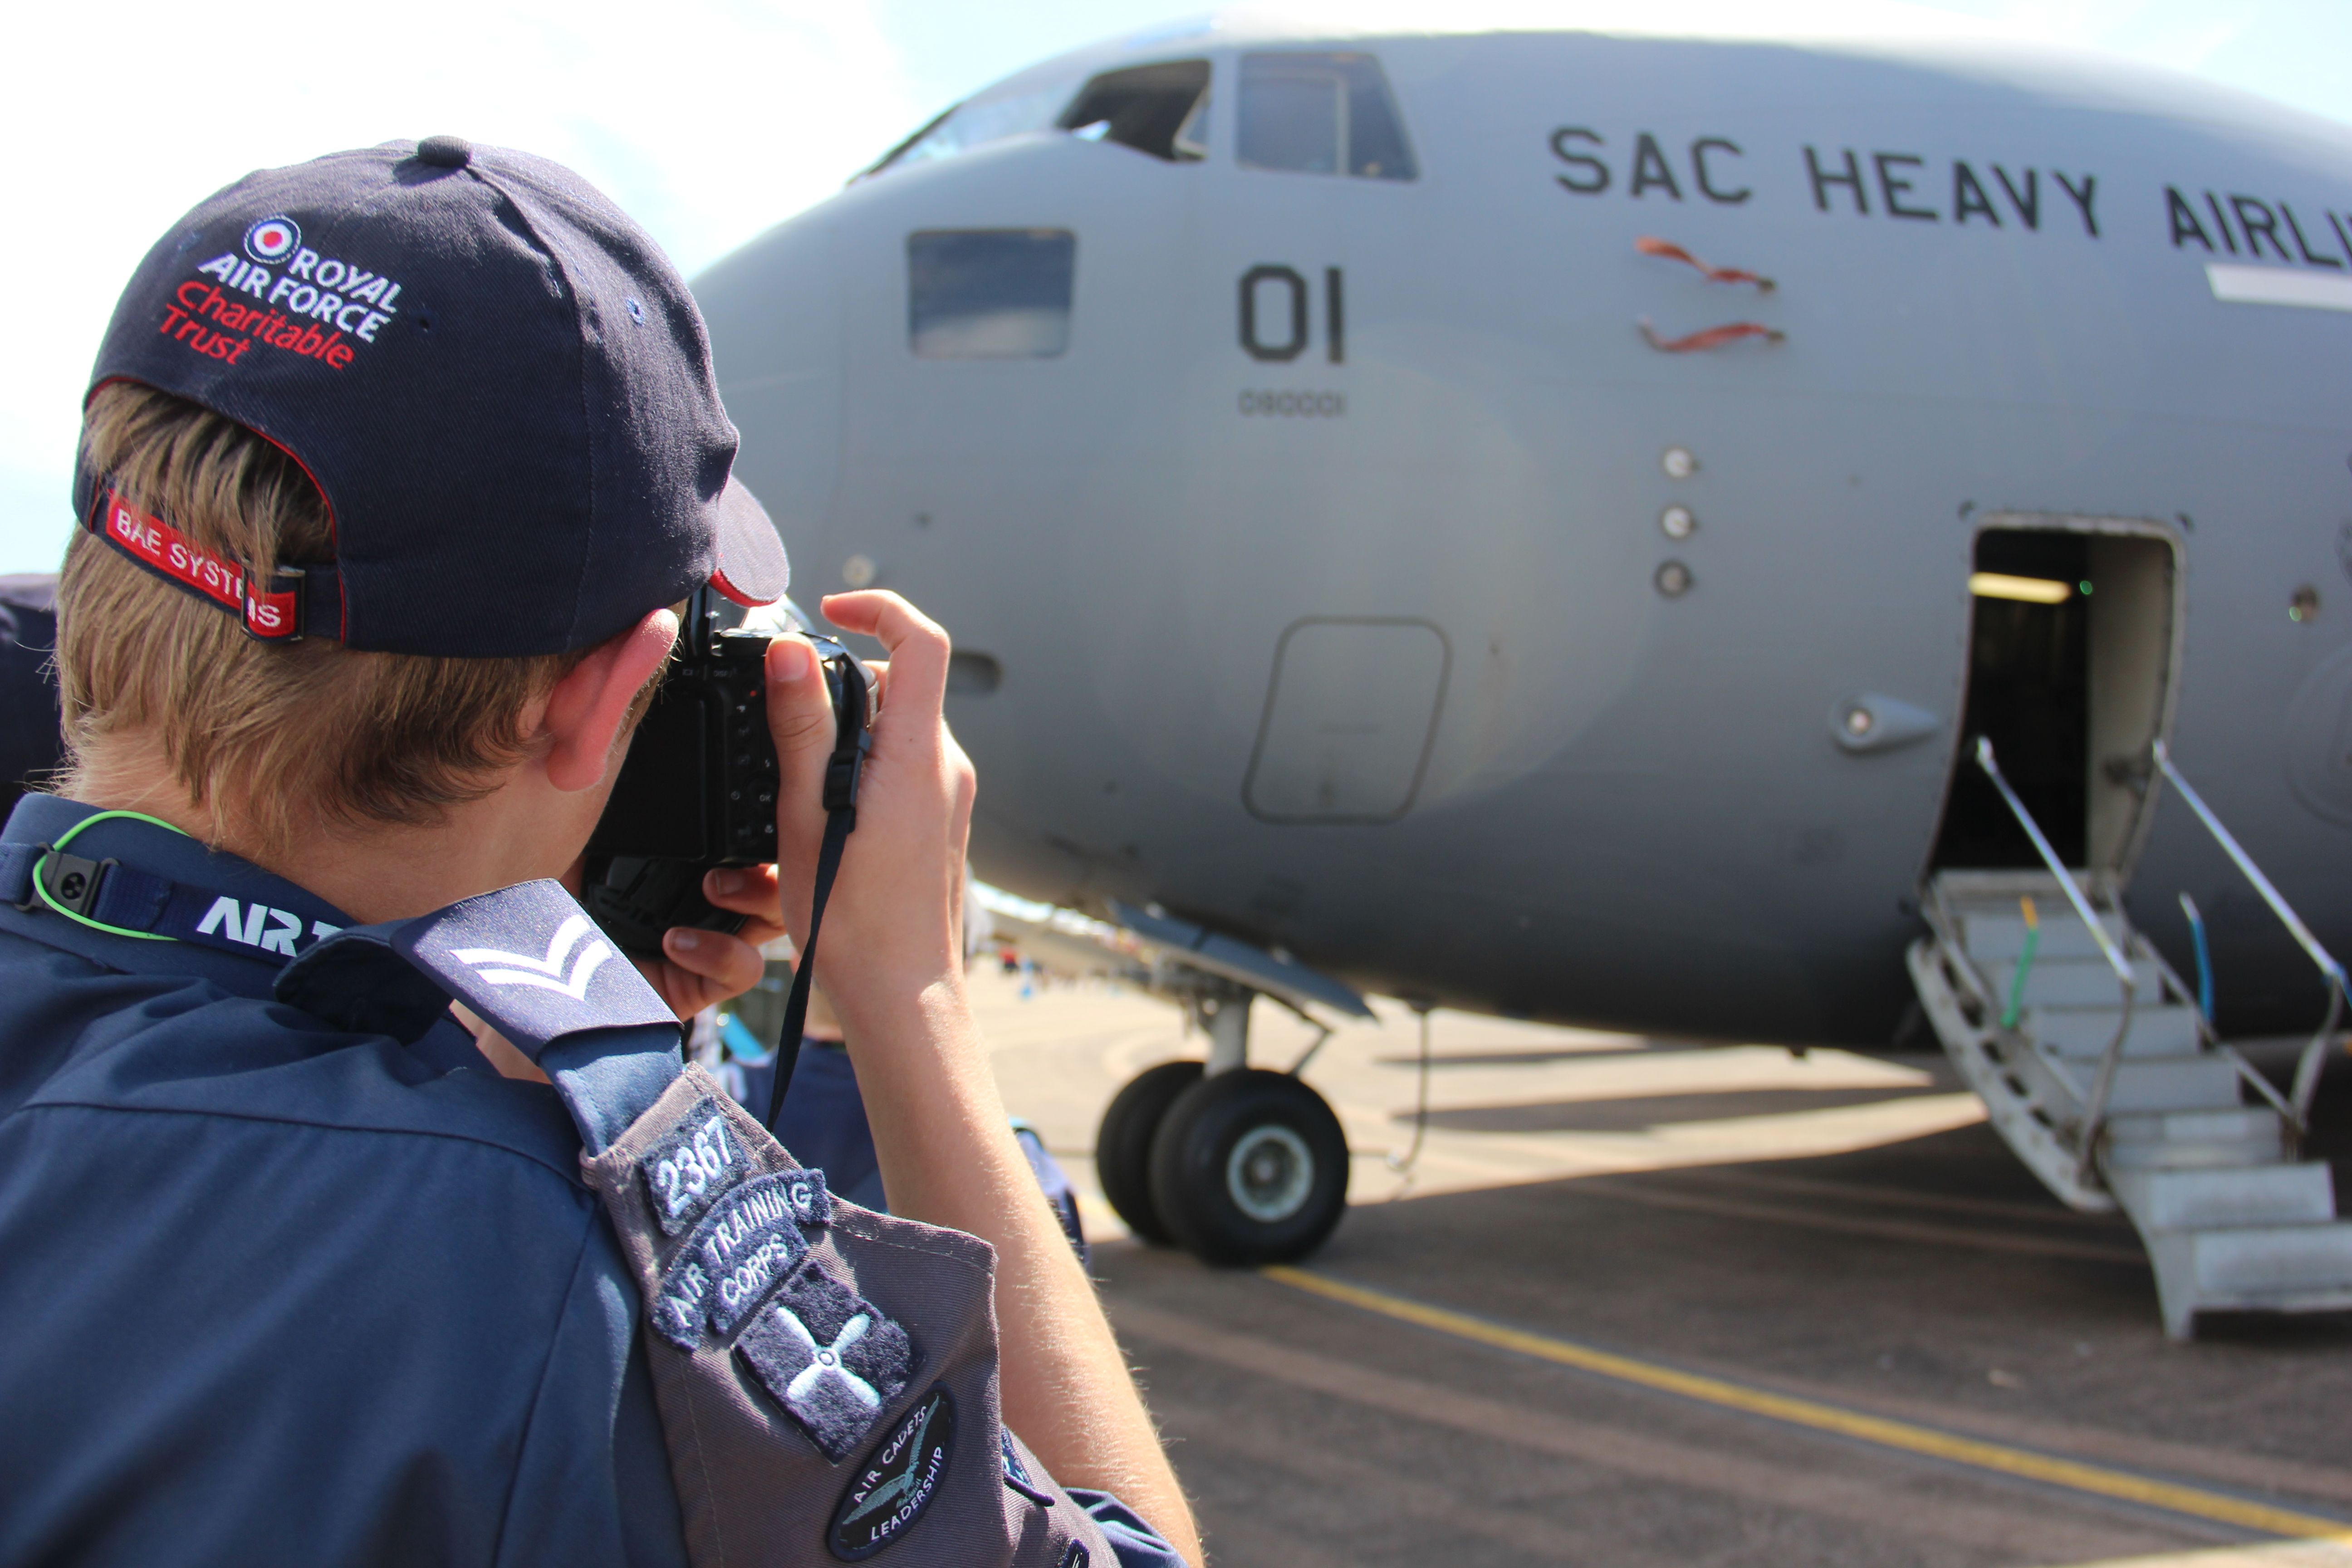 Cadet taking a photo of an RAF aircraft